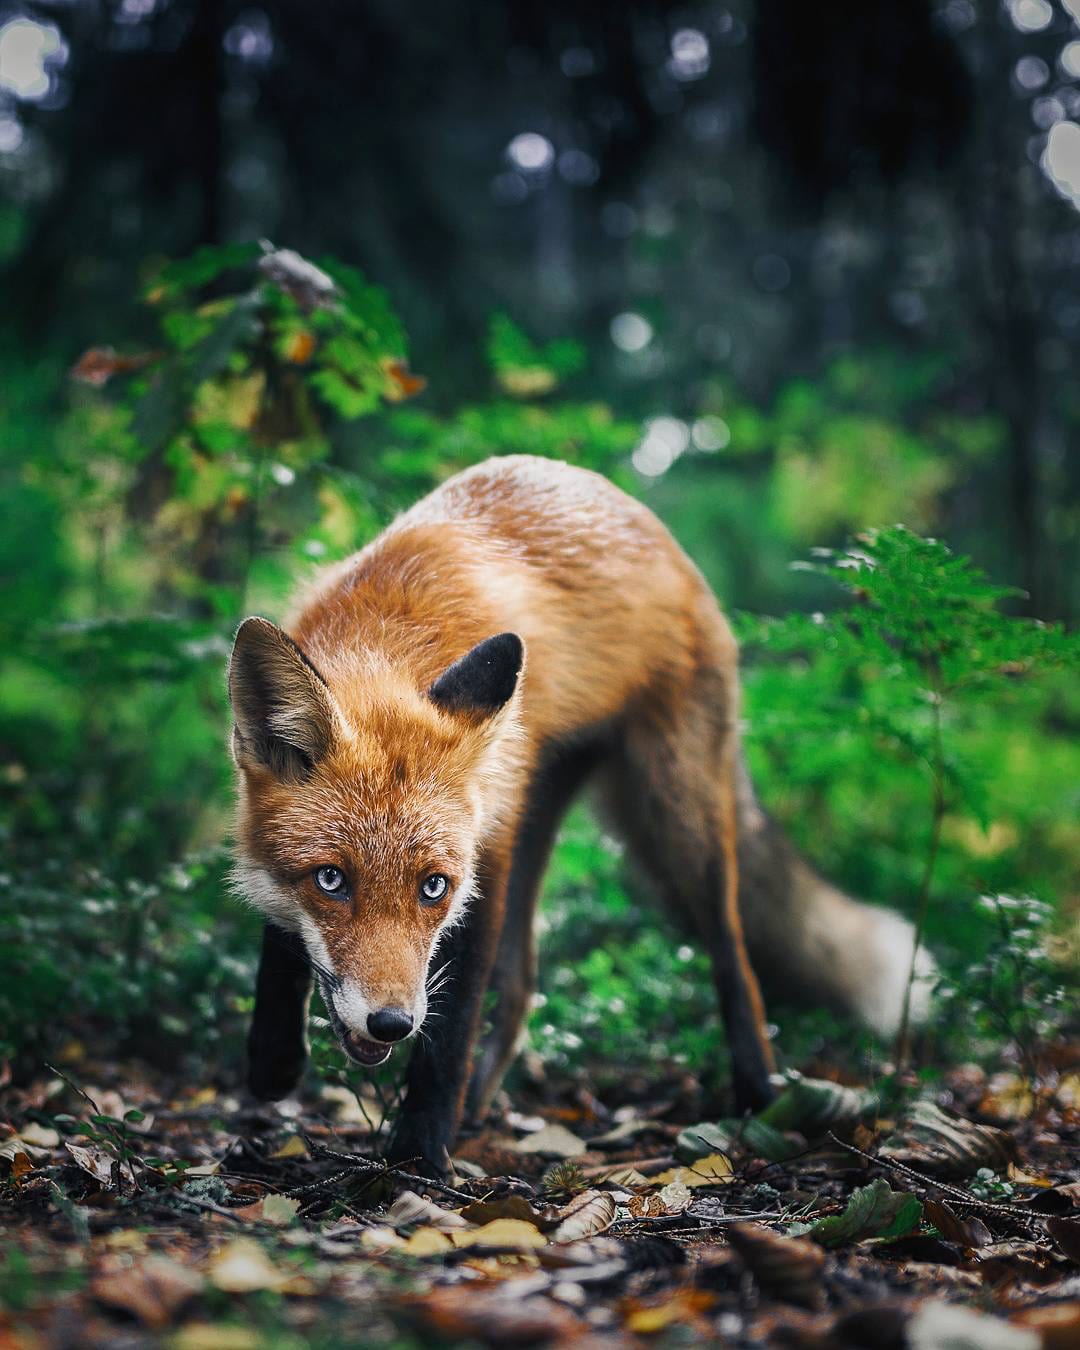 Photos of Forest Animals by Joachim Munter